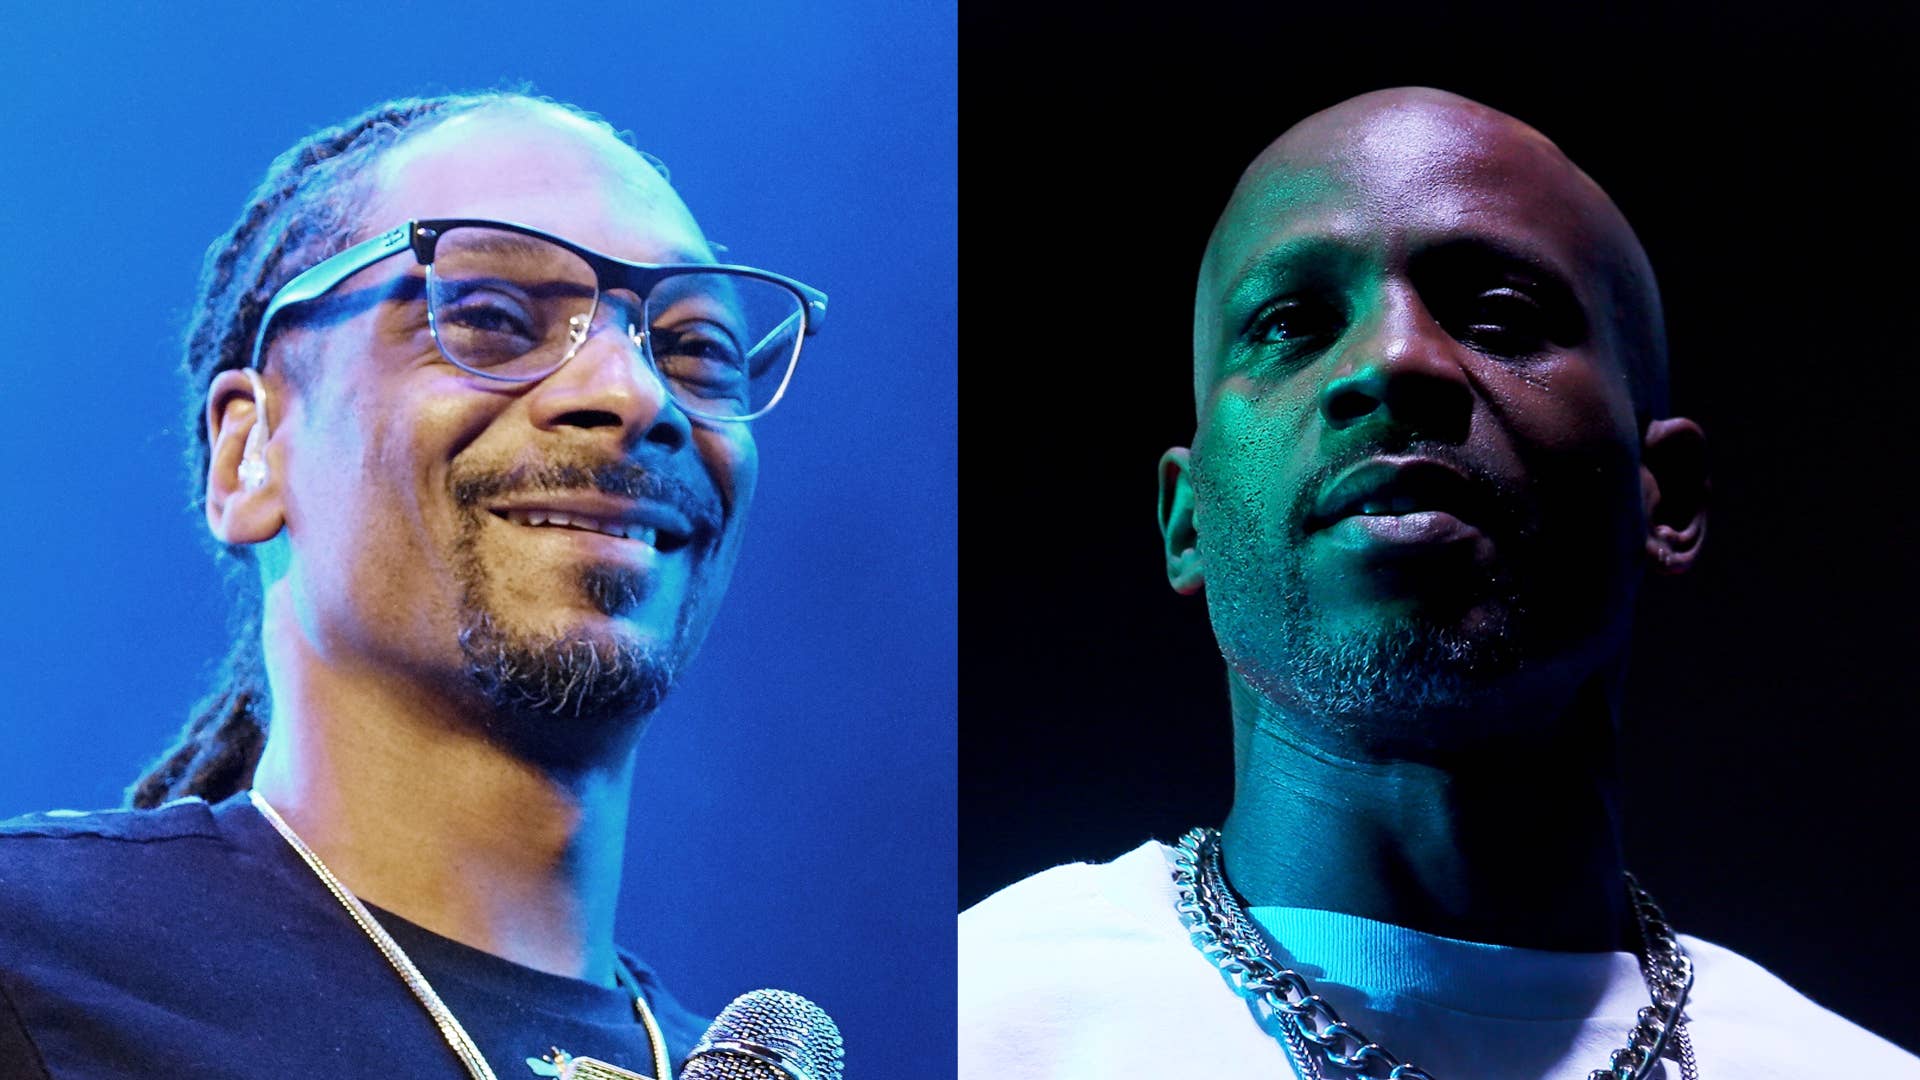 DMX and Snoop Dogg